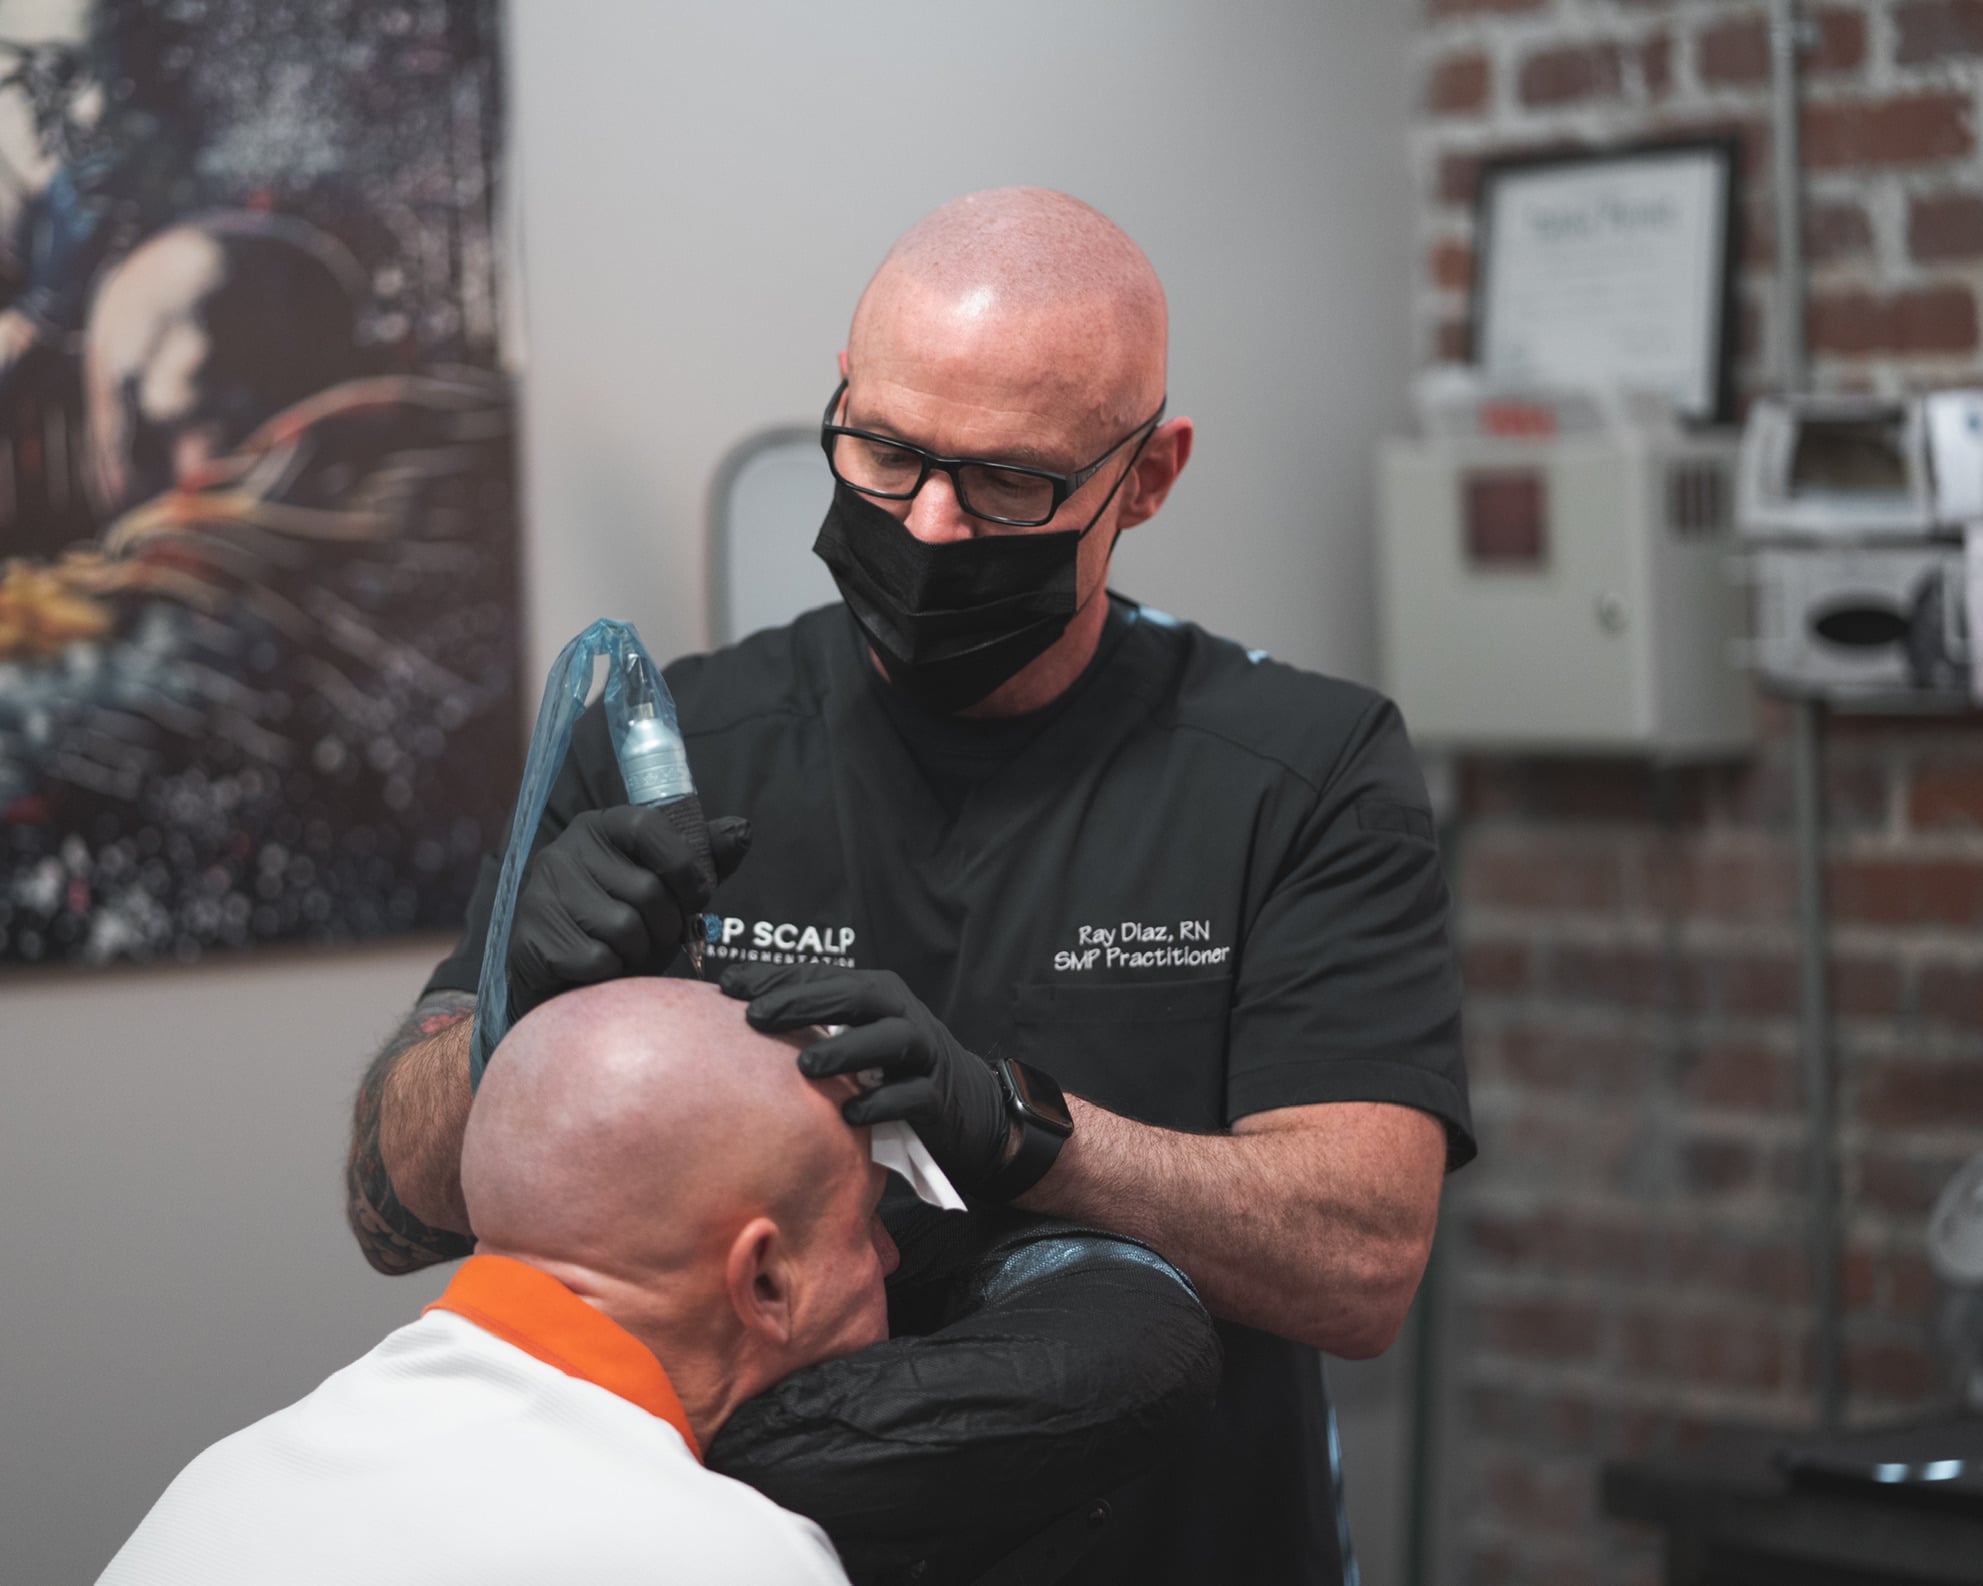 Ray Diaz performing scalp micropigmentation